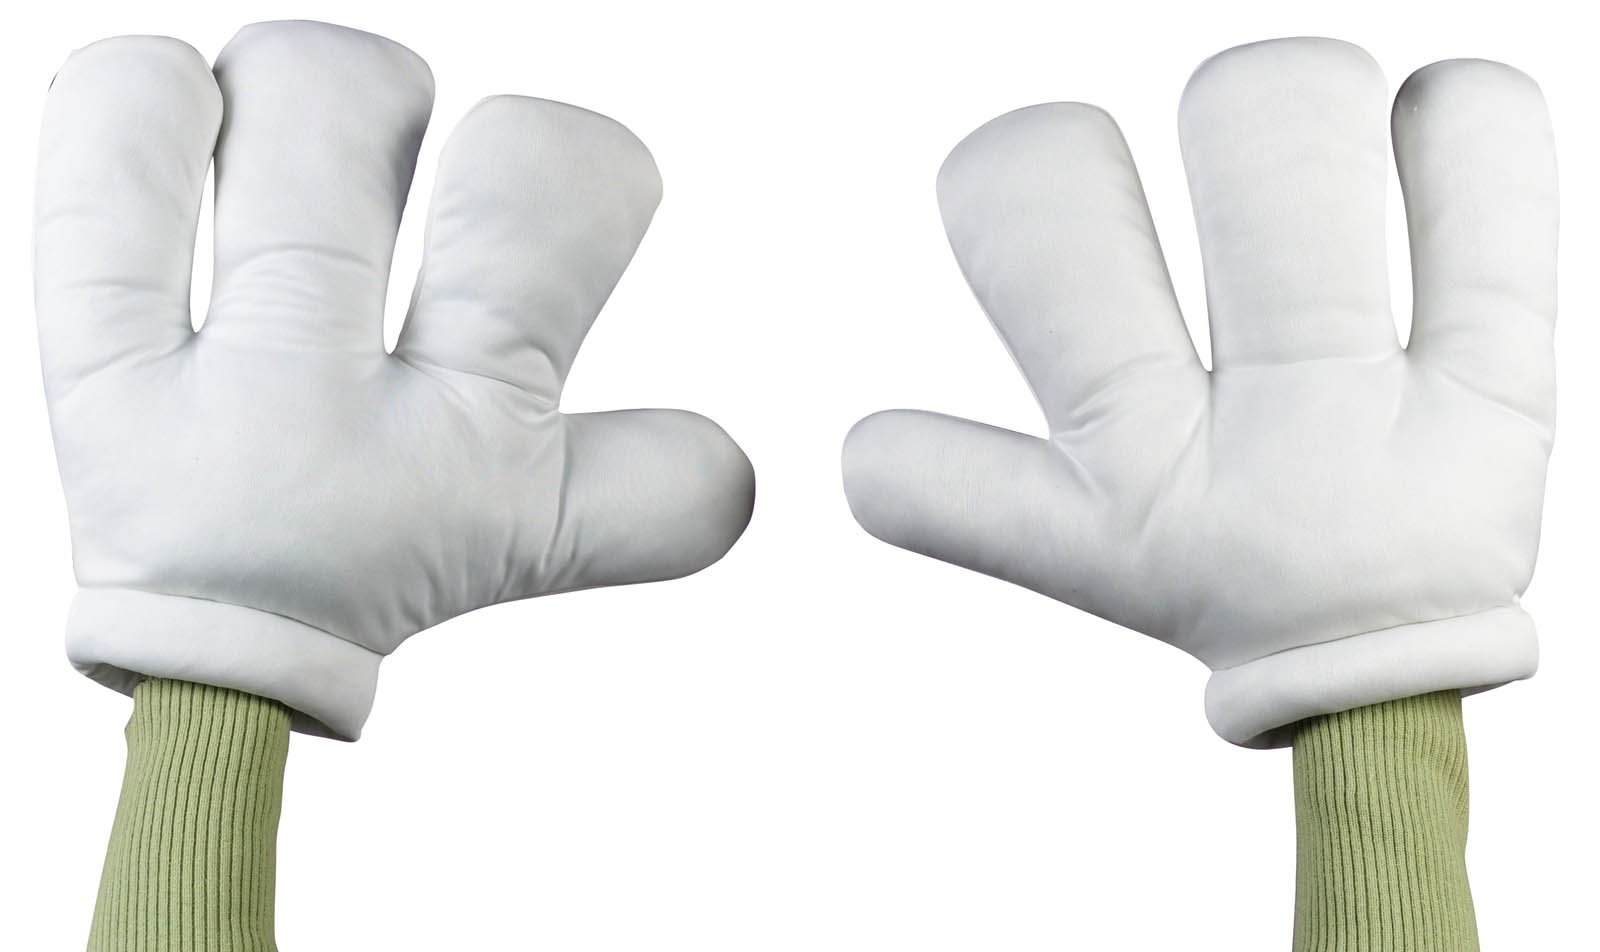 Cartoon Hands Big Jumbo Mario Costume Gloves Plush Adult Teen Men Women